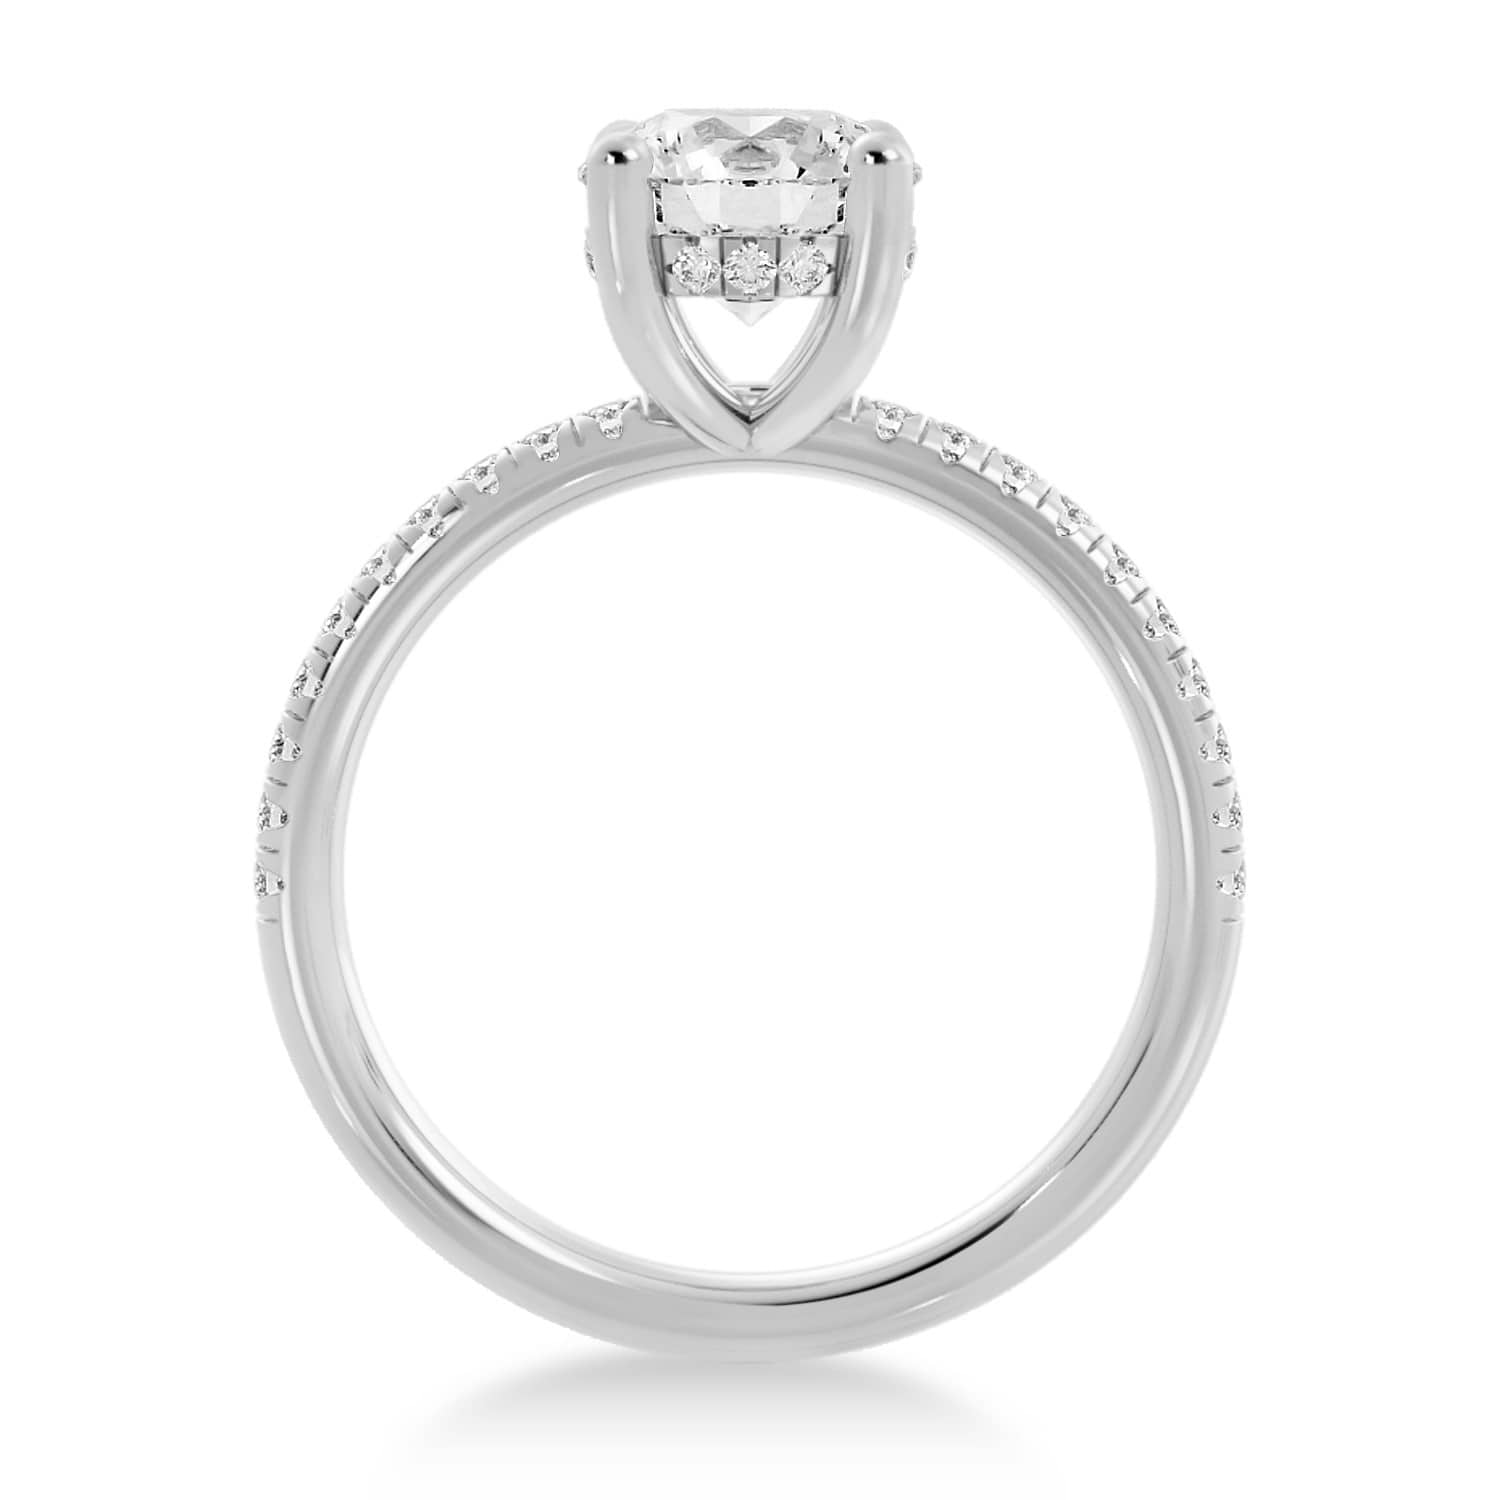 Lab Grown Diamond Hidden Halo Pave' Engagement Ring 14k White Gold (0.26ct)